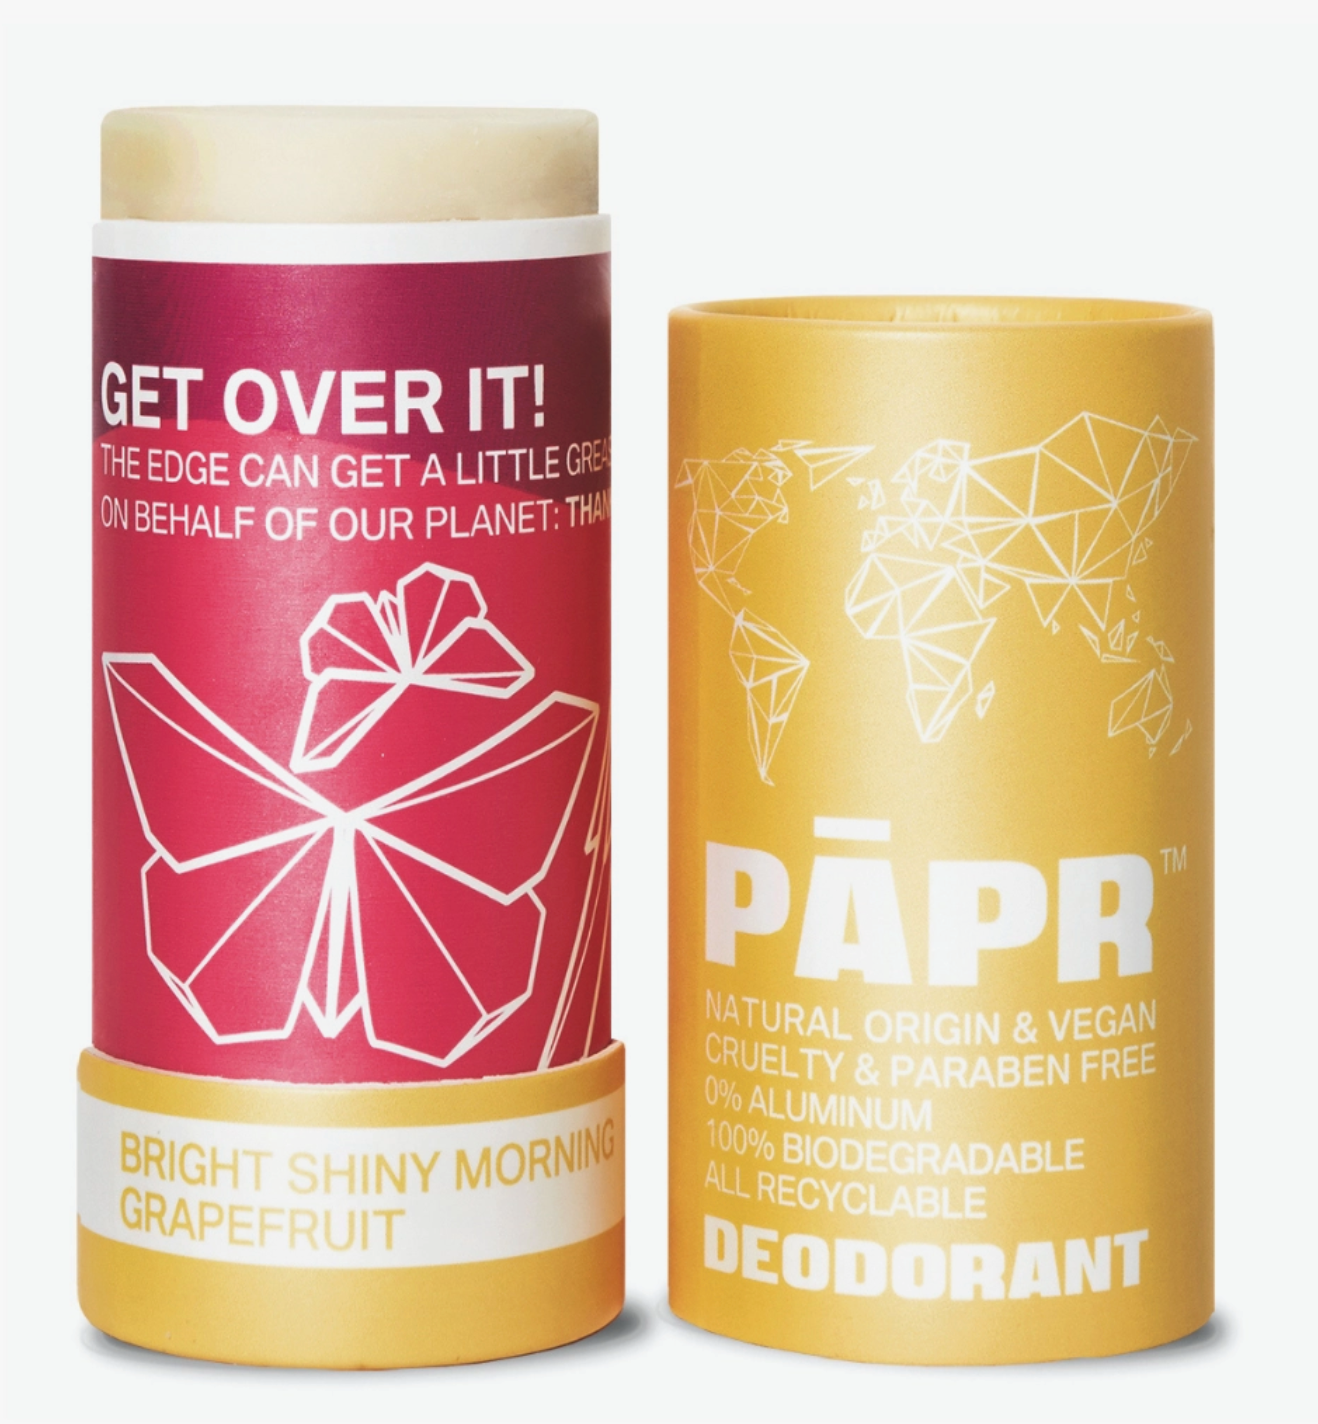 deodorant by paper cosmetics